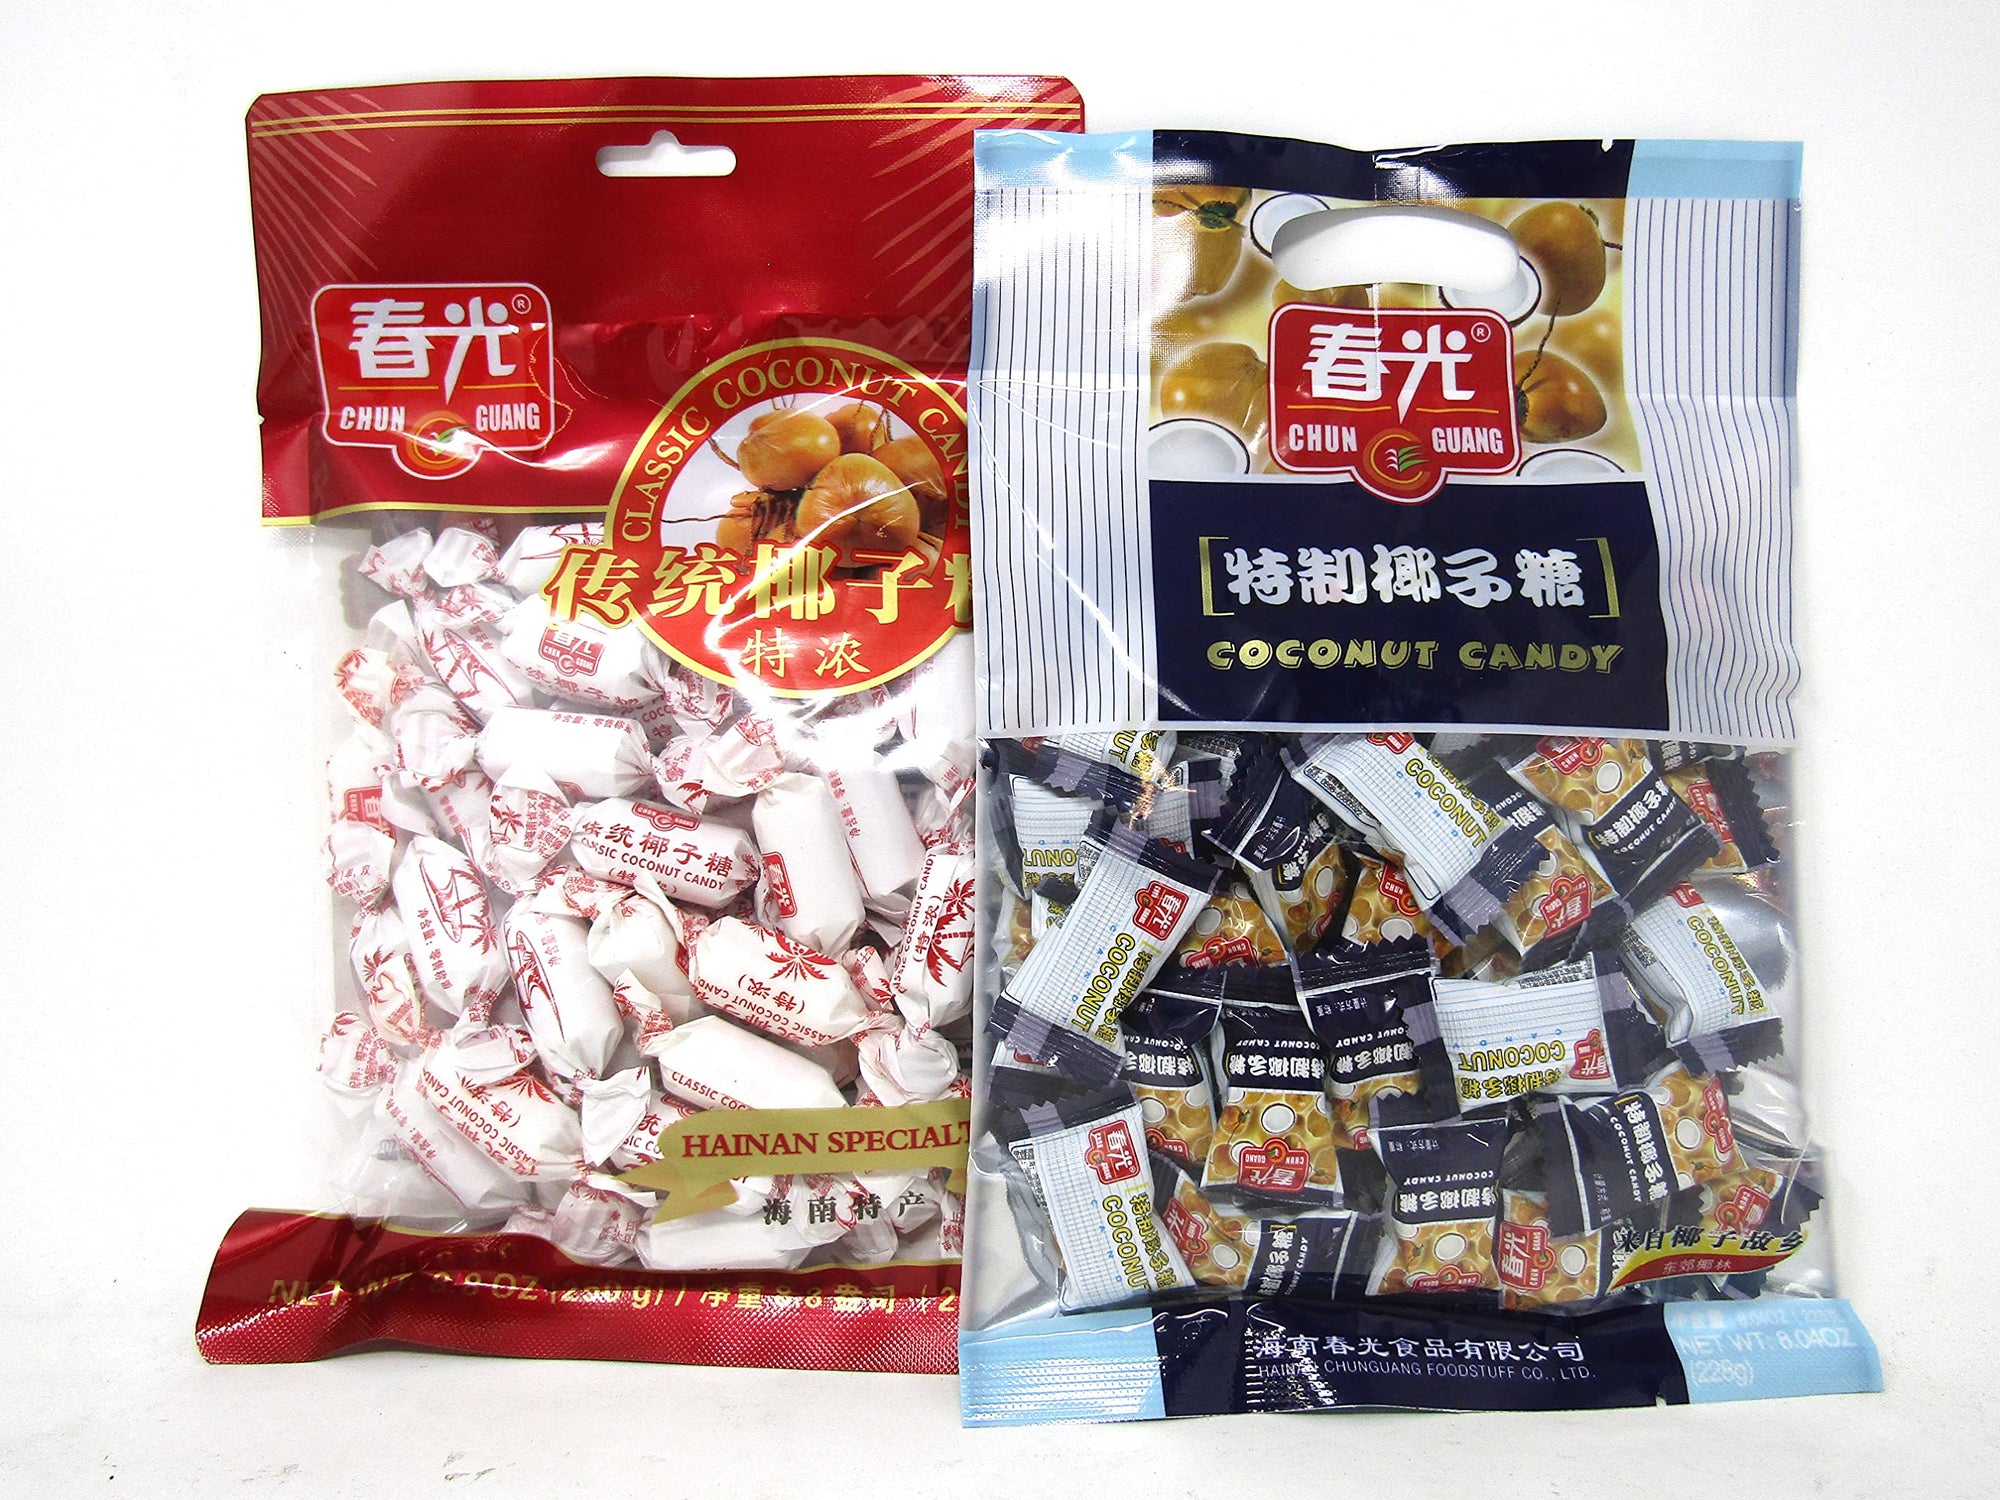 2 Pack Bundle Chun Guang CLASSIC Creamy Coconut Candy and Chun Guang PREMIUM Coconut Candy